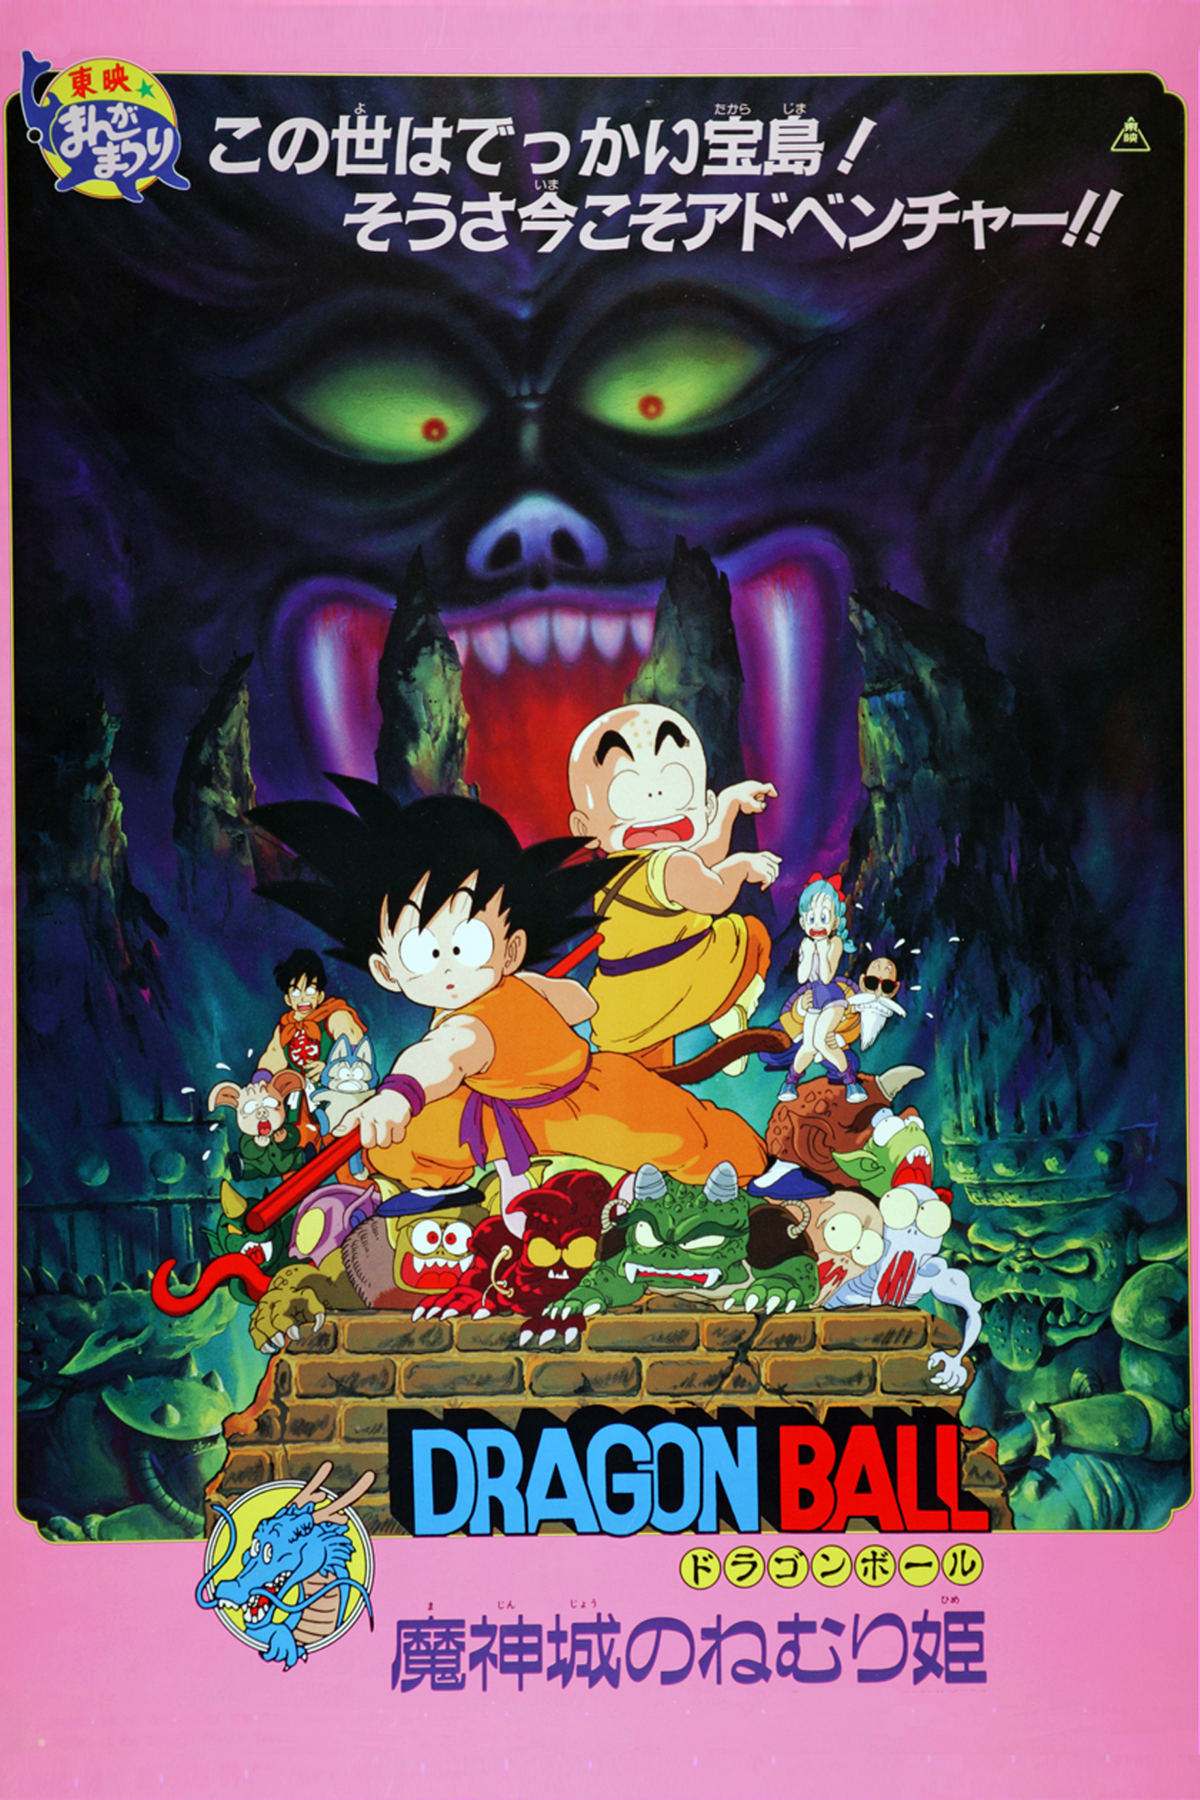 Dragon Ball Z: Broly - Second Coming (1994) - IMDb